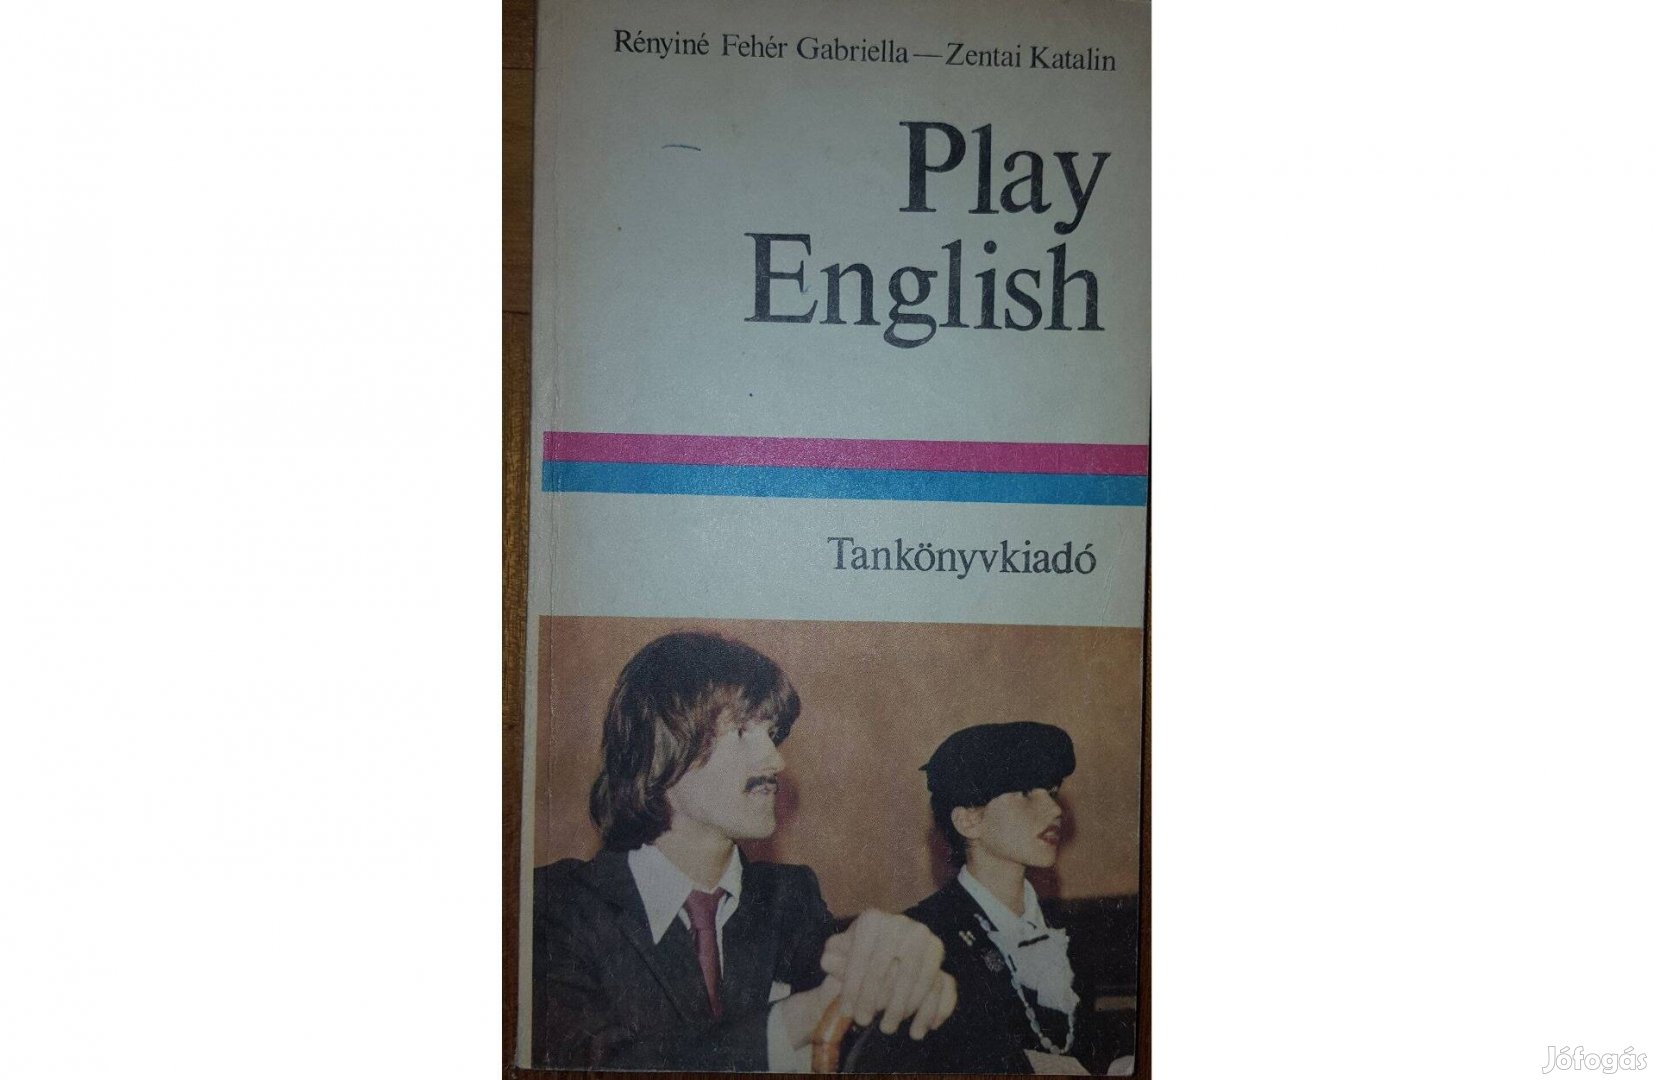 Rényiné Fehér Gabriella, Zentai Katalin: Play English